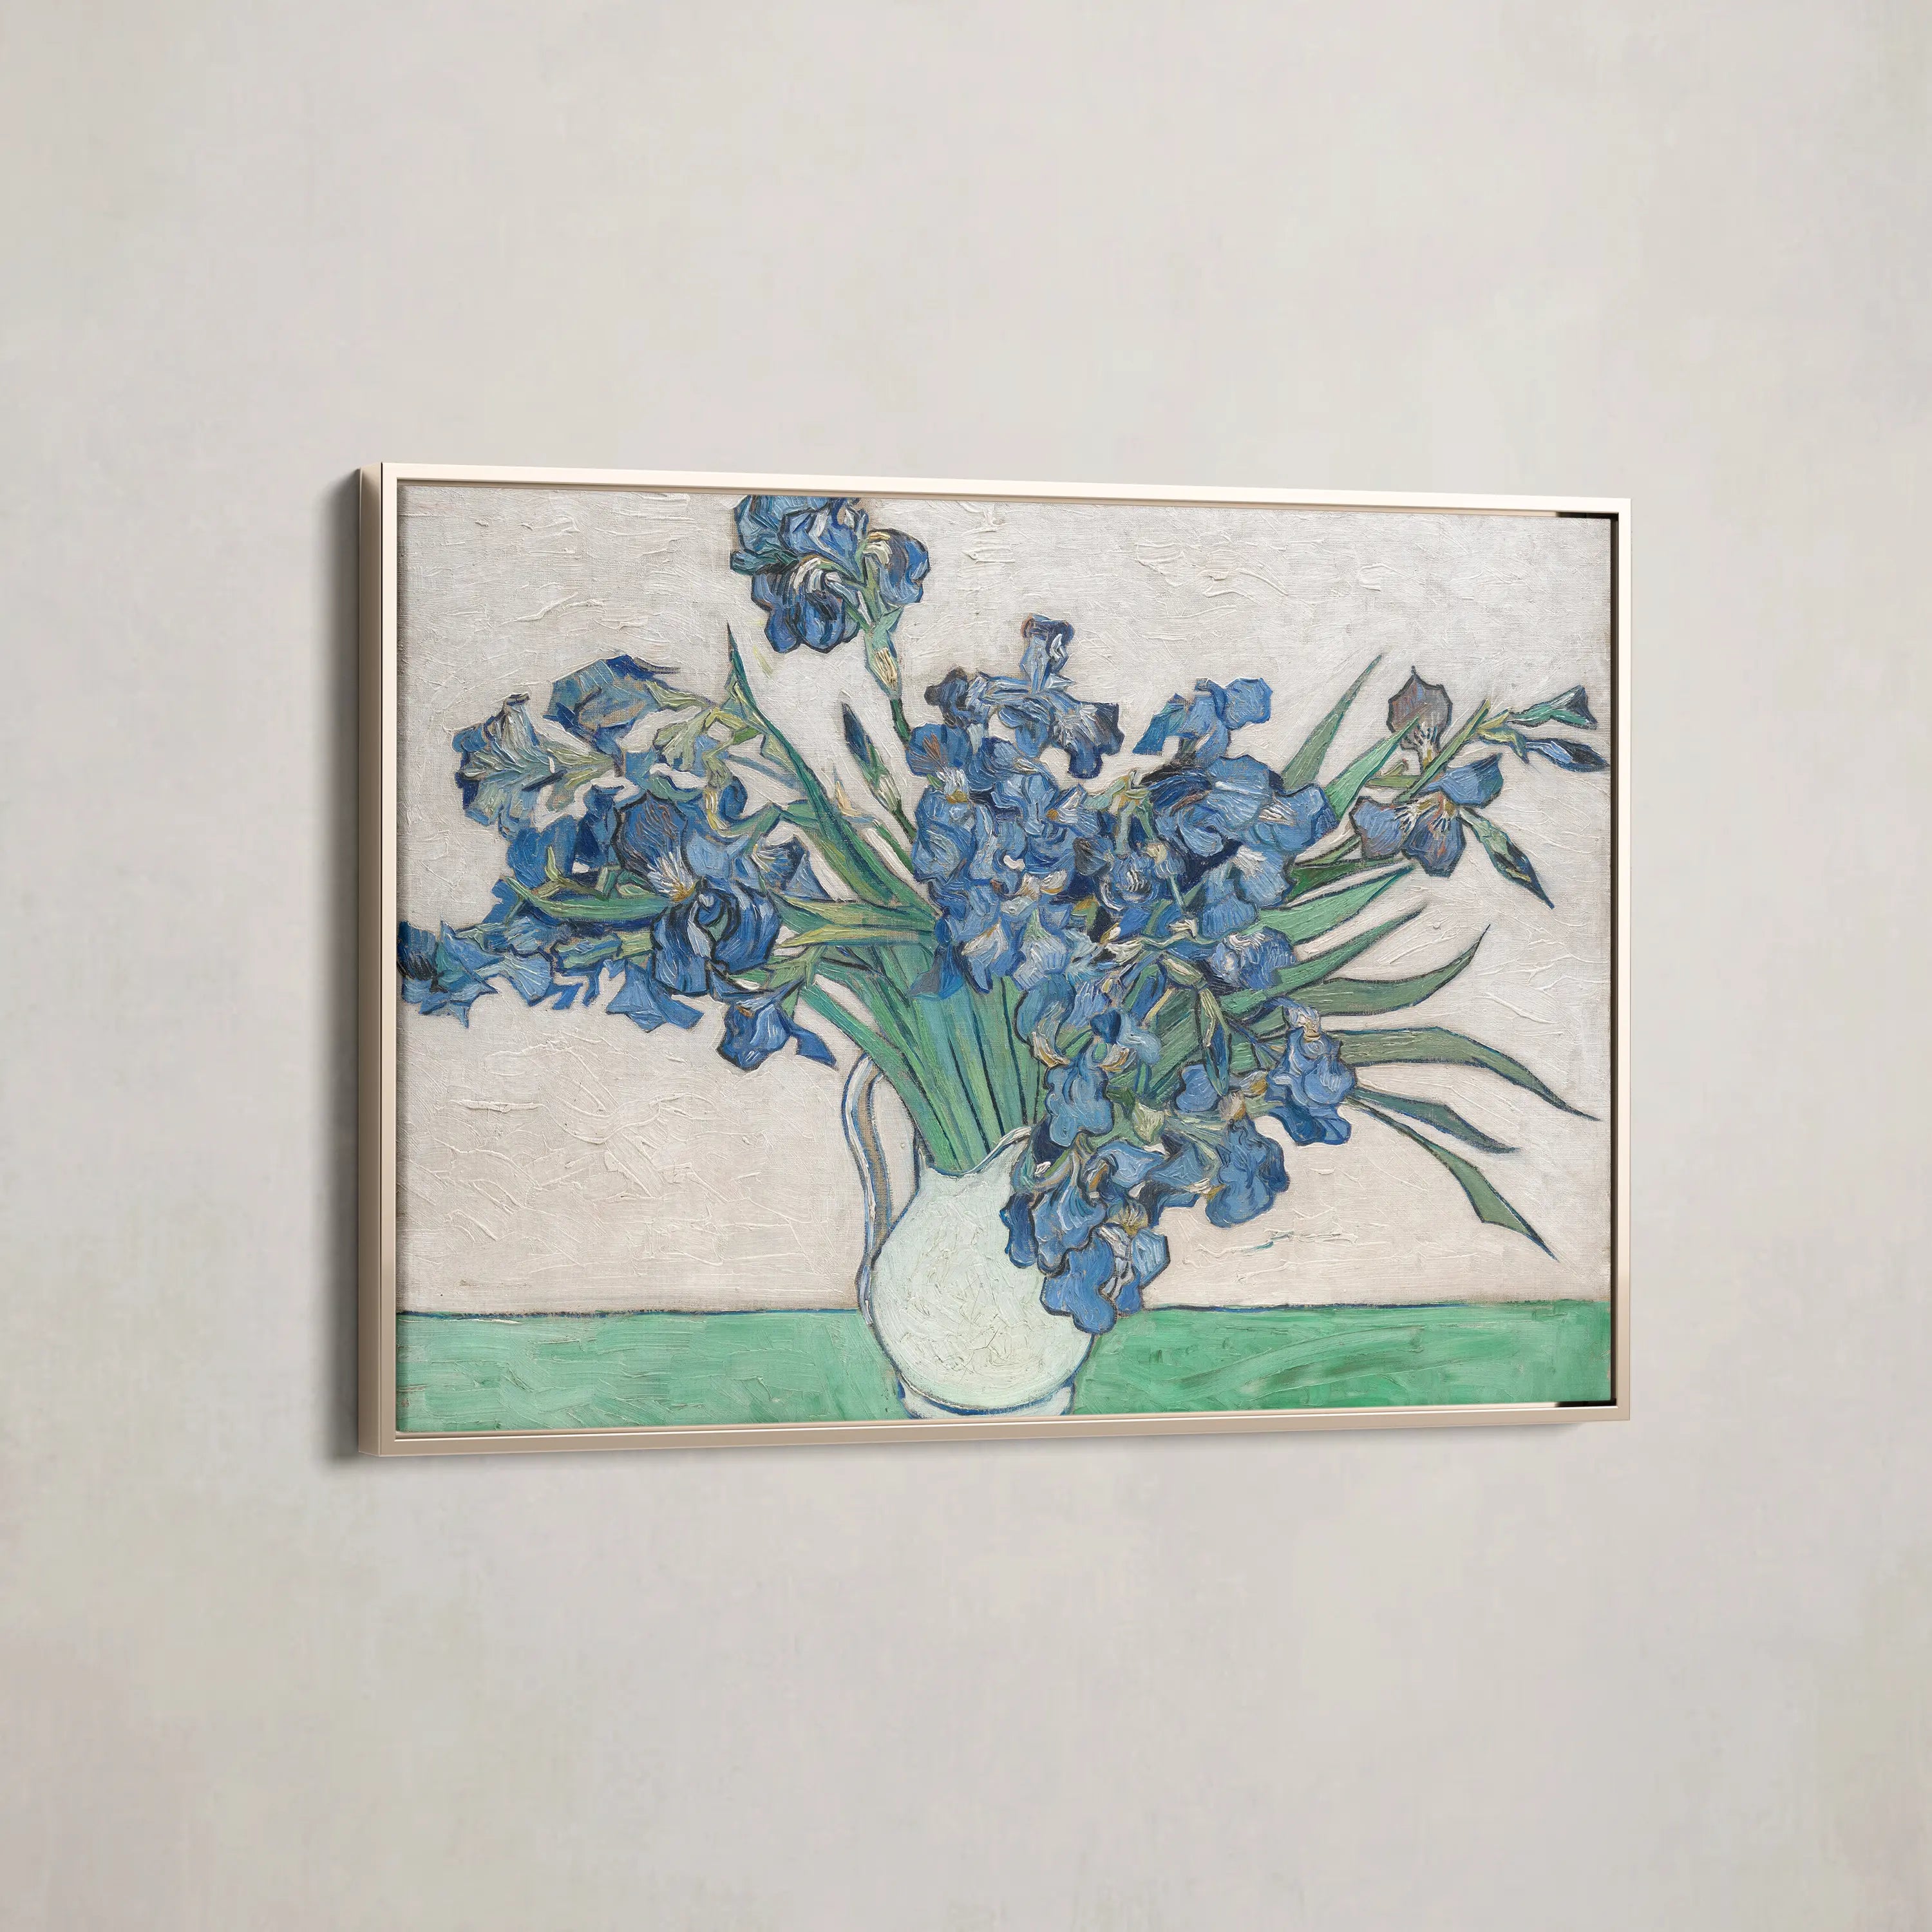 Irises 2 (1890) by Vincent van Gogh